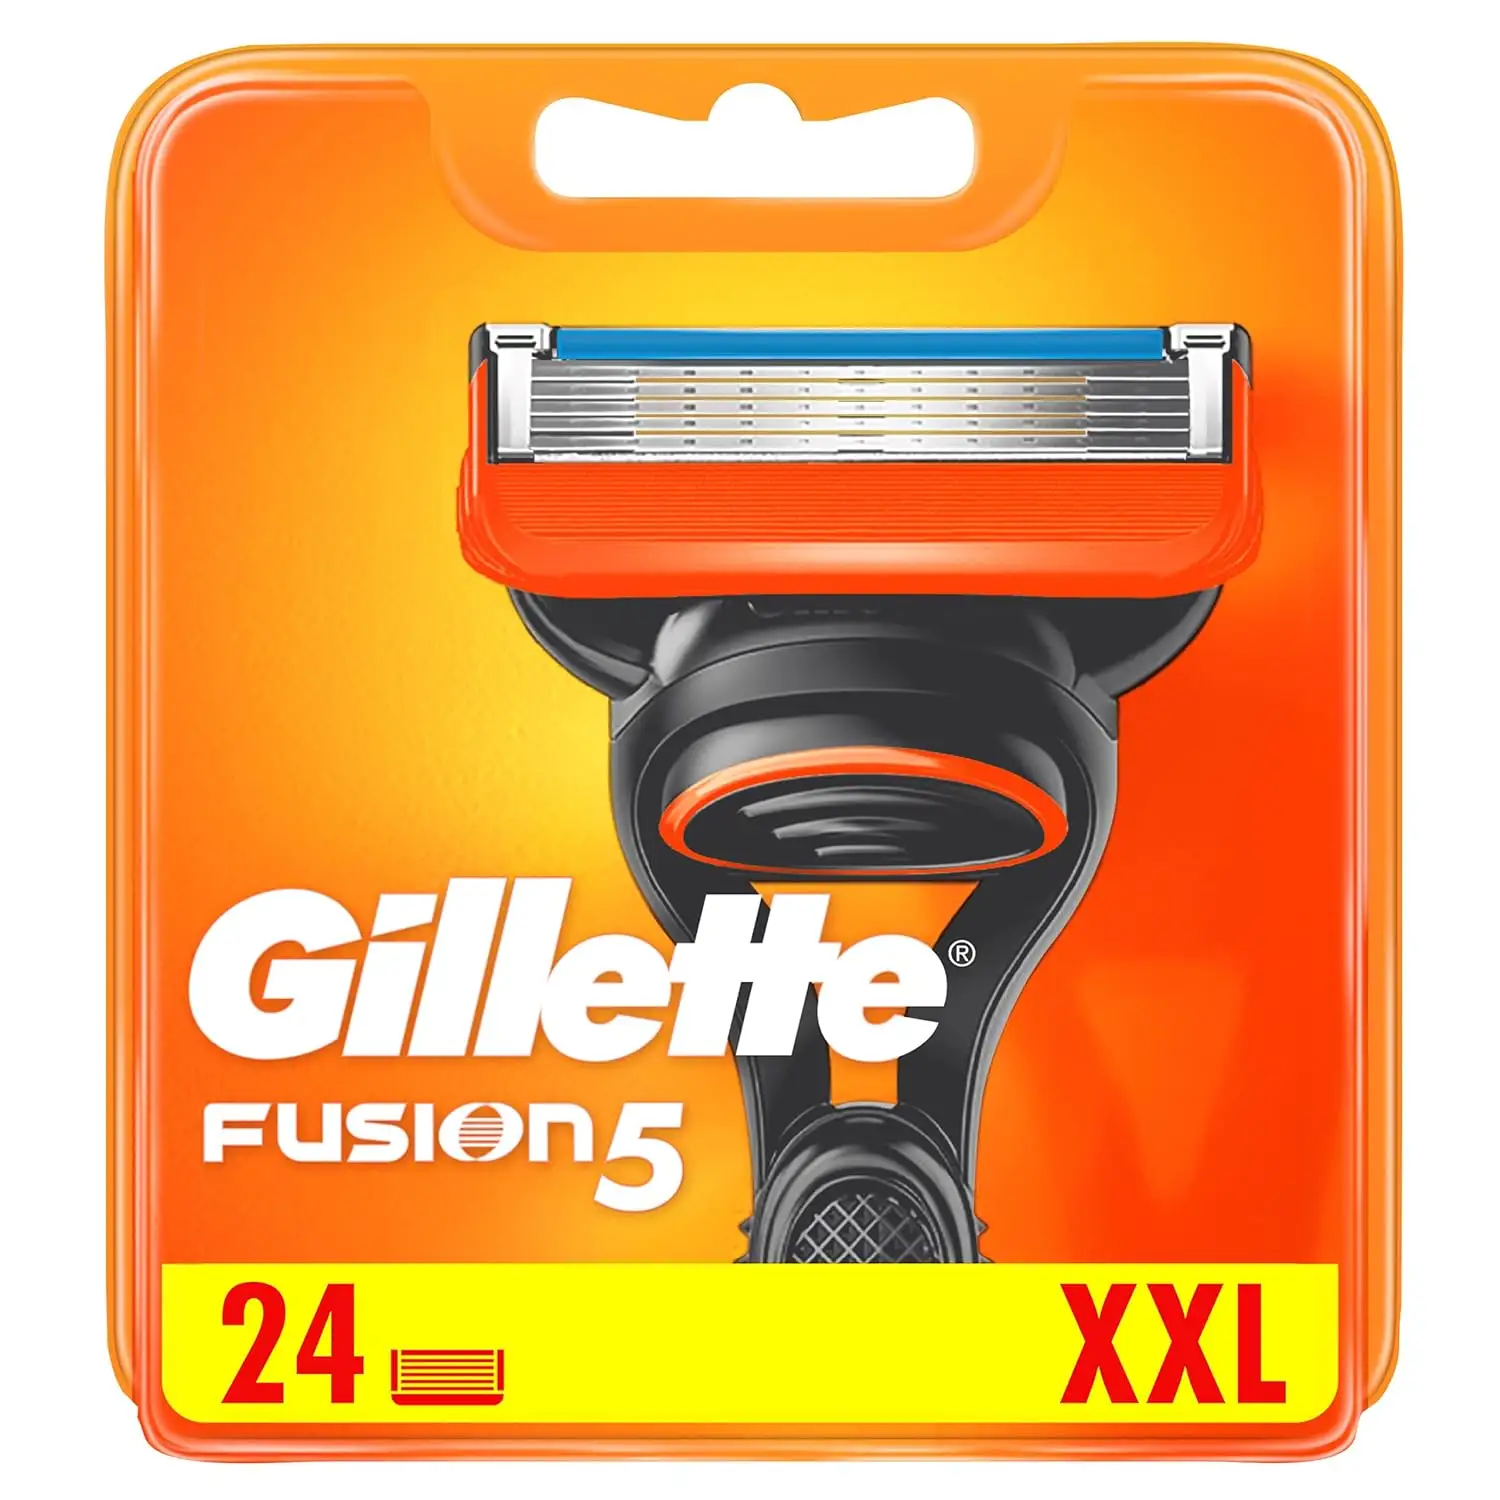 Gillette Fusion5 Mens Razors 8 Razor Blade Refills Plus Gillette PURE Mens Soothing Shaving Cream with Aloe, 6 oz